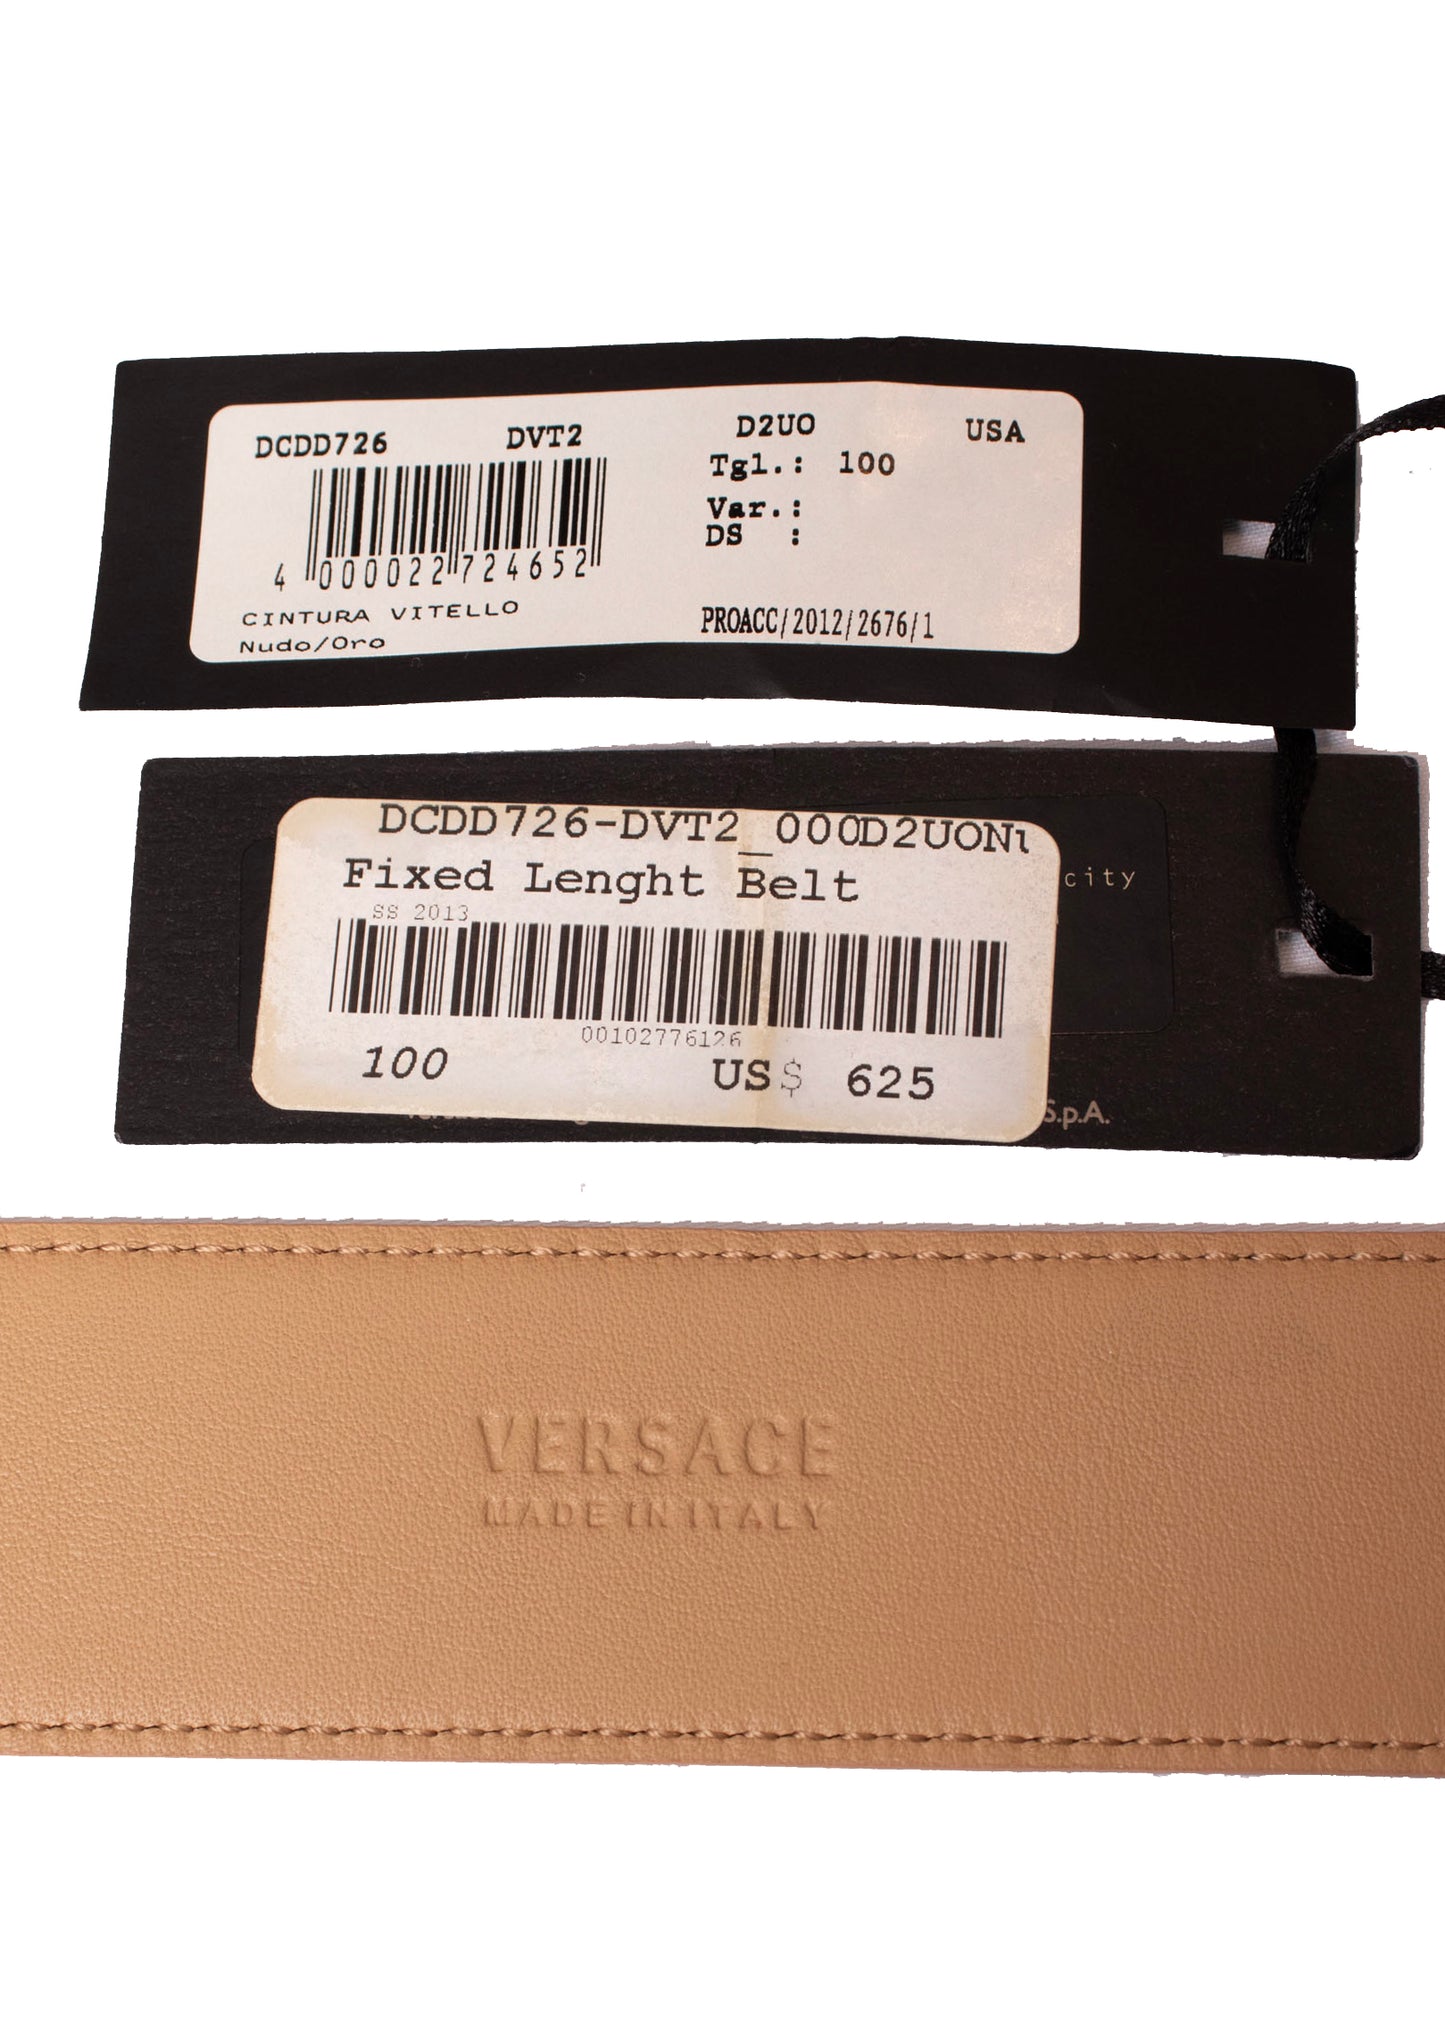 Versace Tan Leather and Gold Medusa Belt L/XL